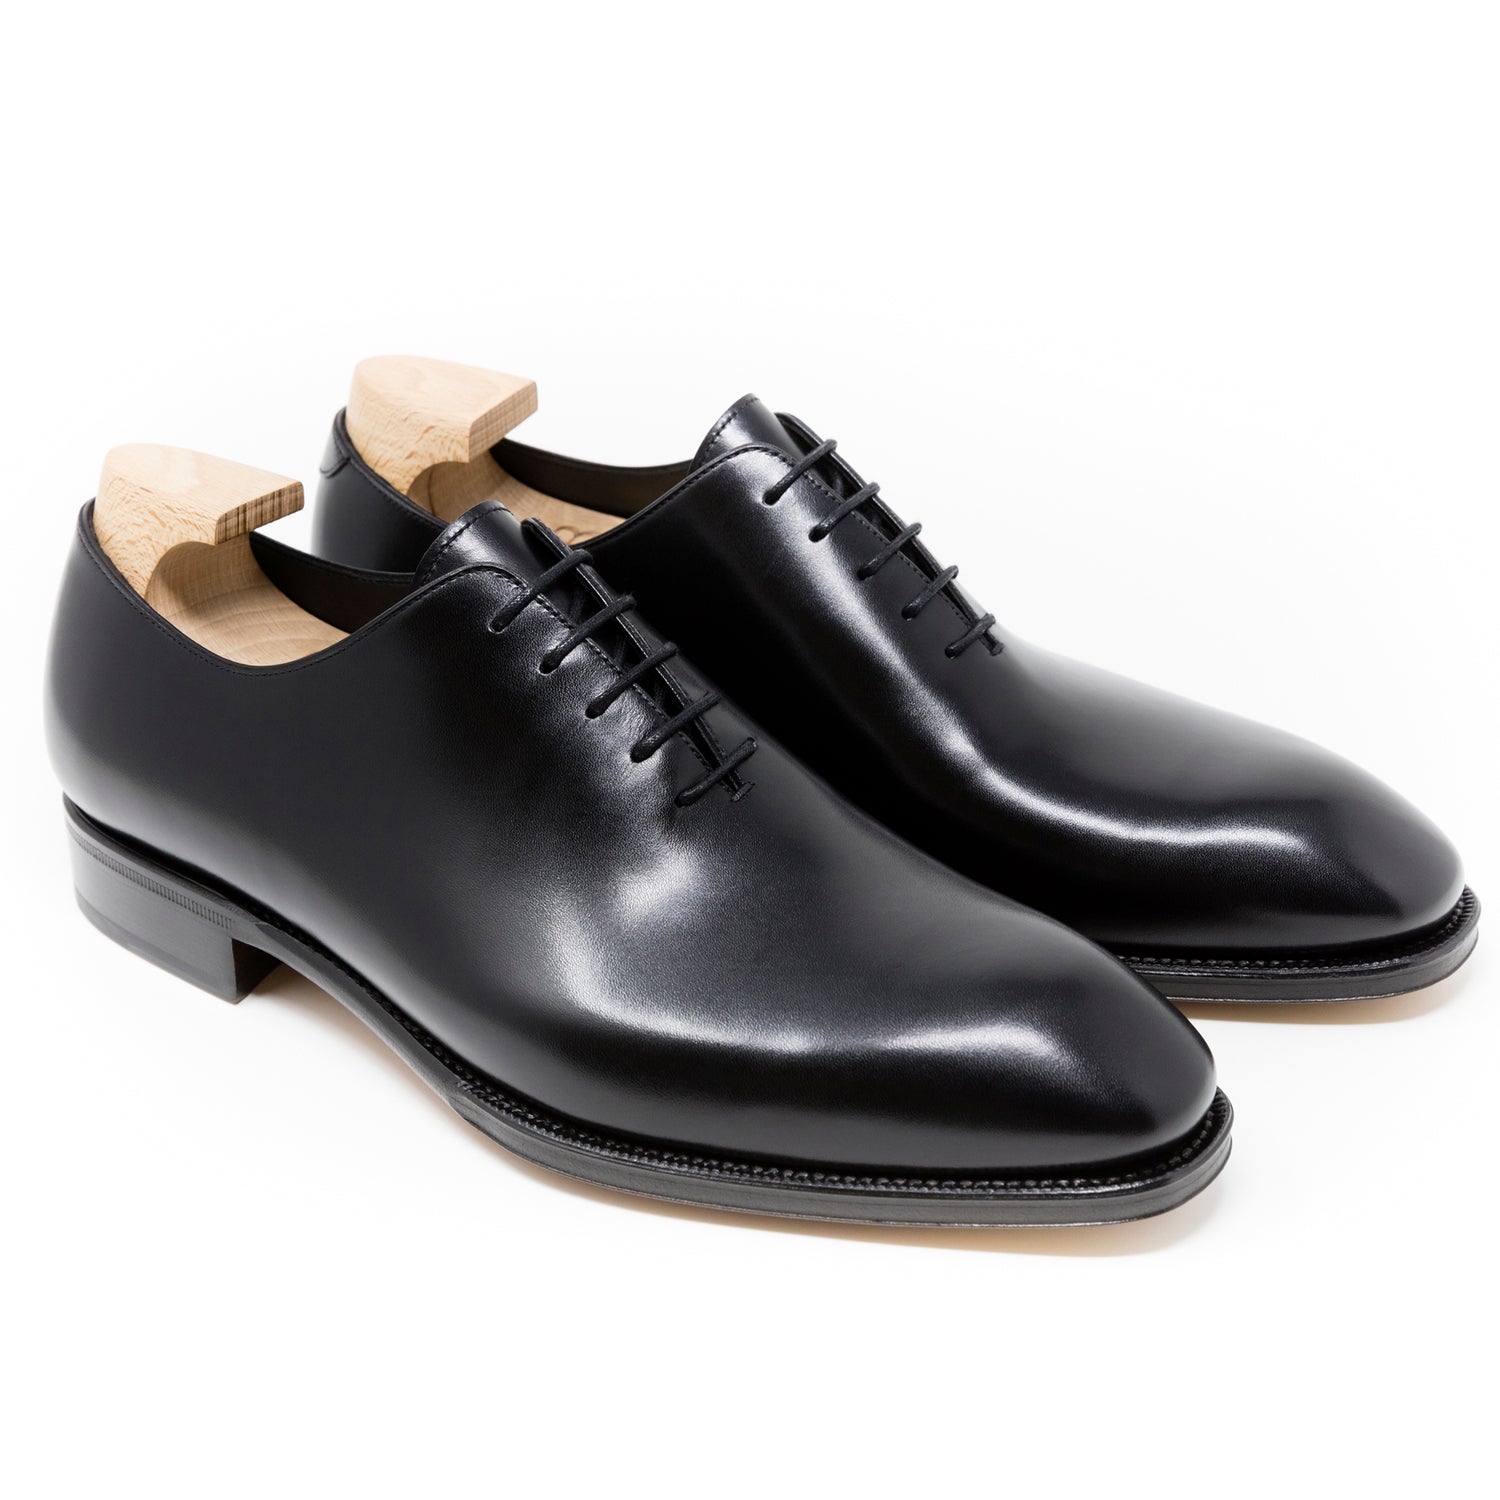 TLB Mallorca leather shoes 501 / ALAN / BOXCALF BLACK